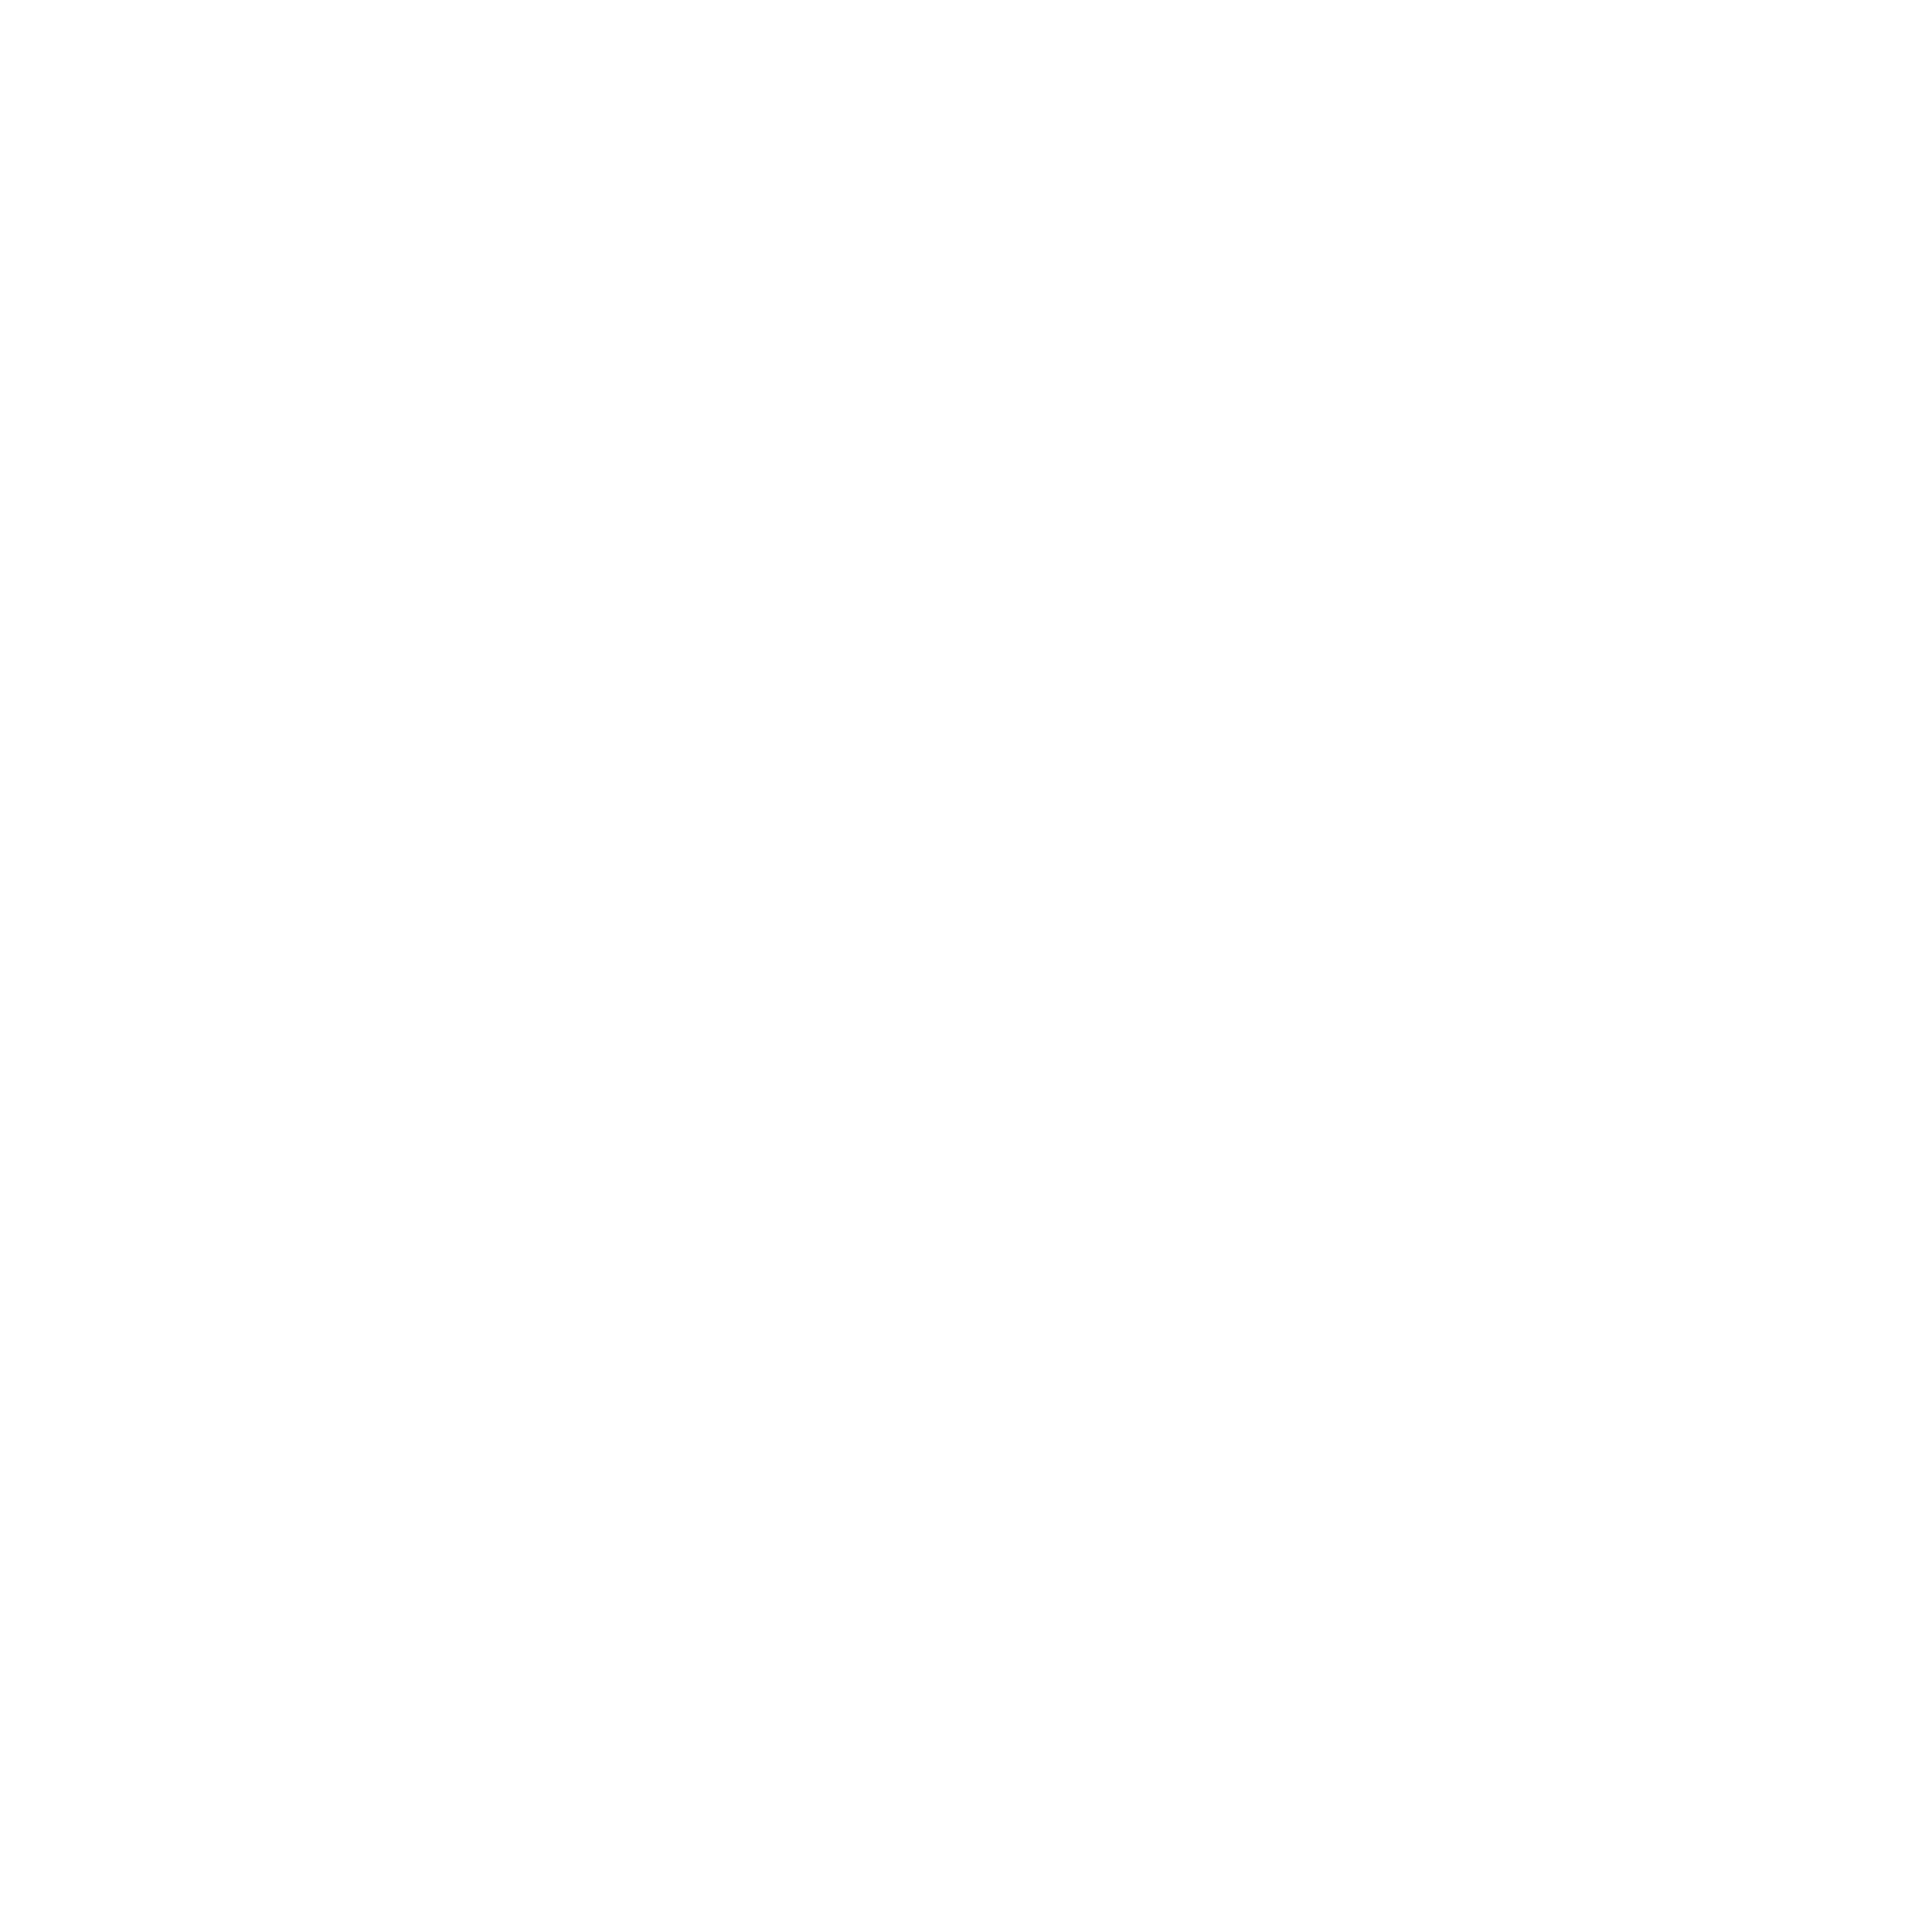 Tennant Logo - Tennant Logo PNG Transparent & SVG Vector - Freebie Supply